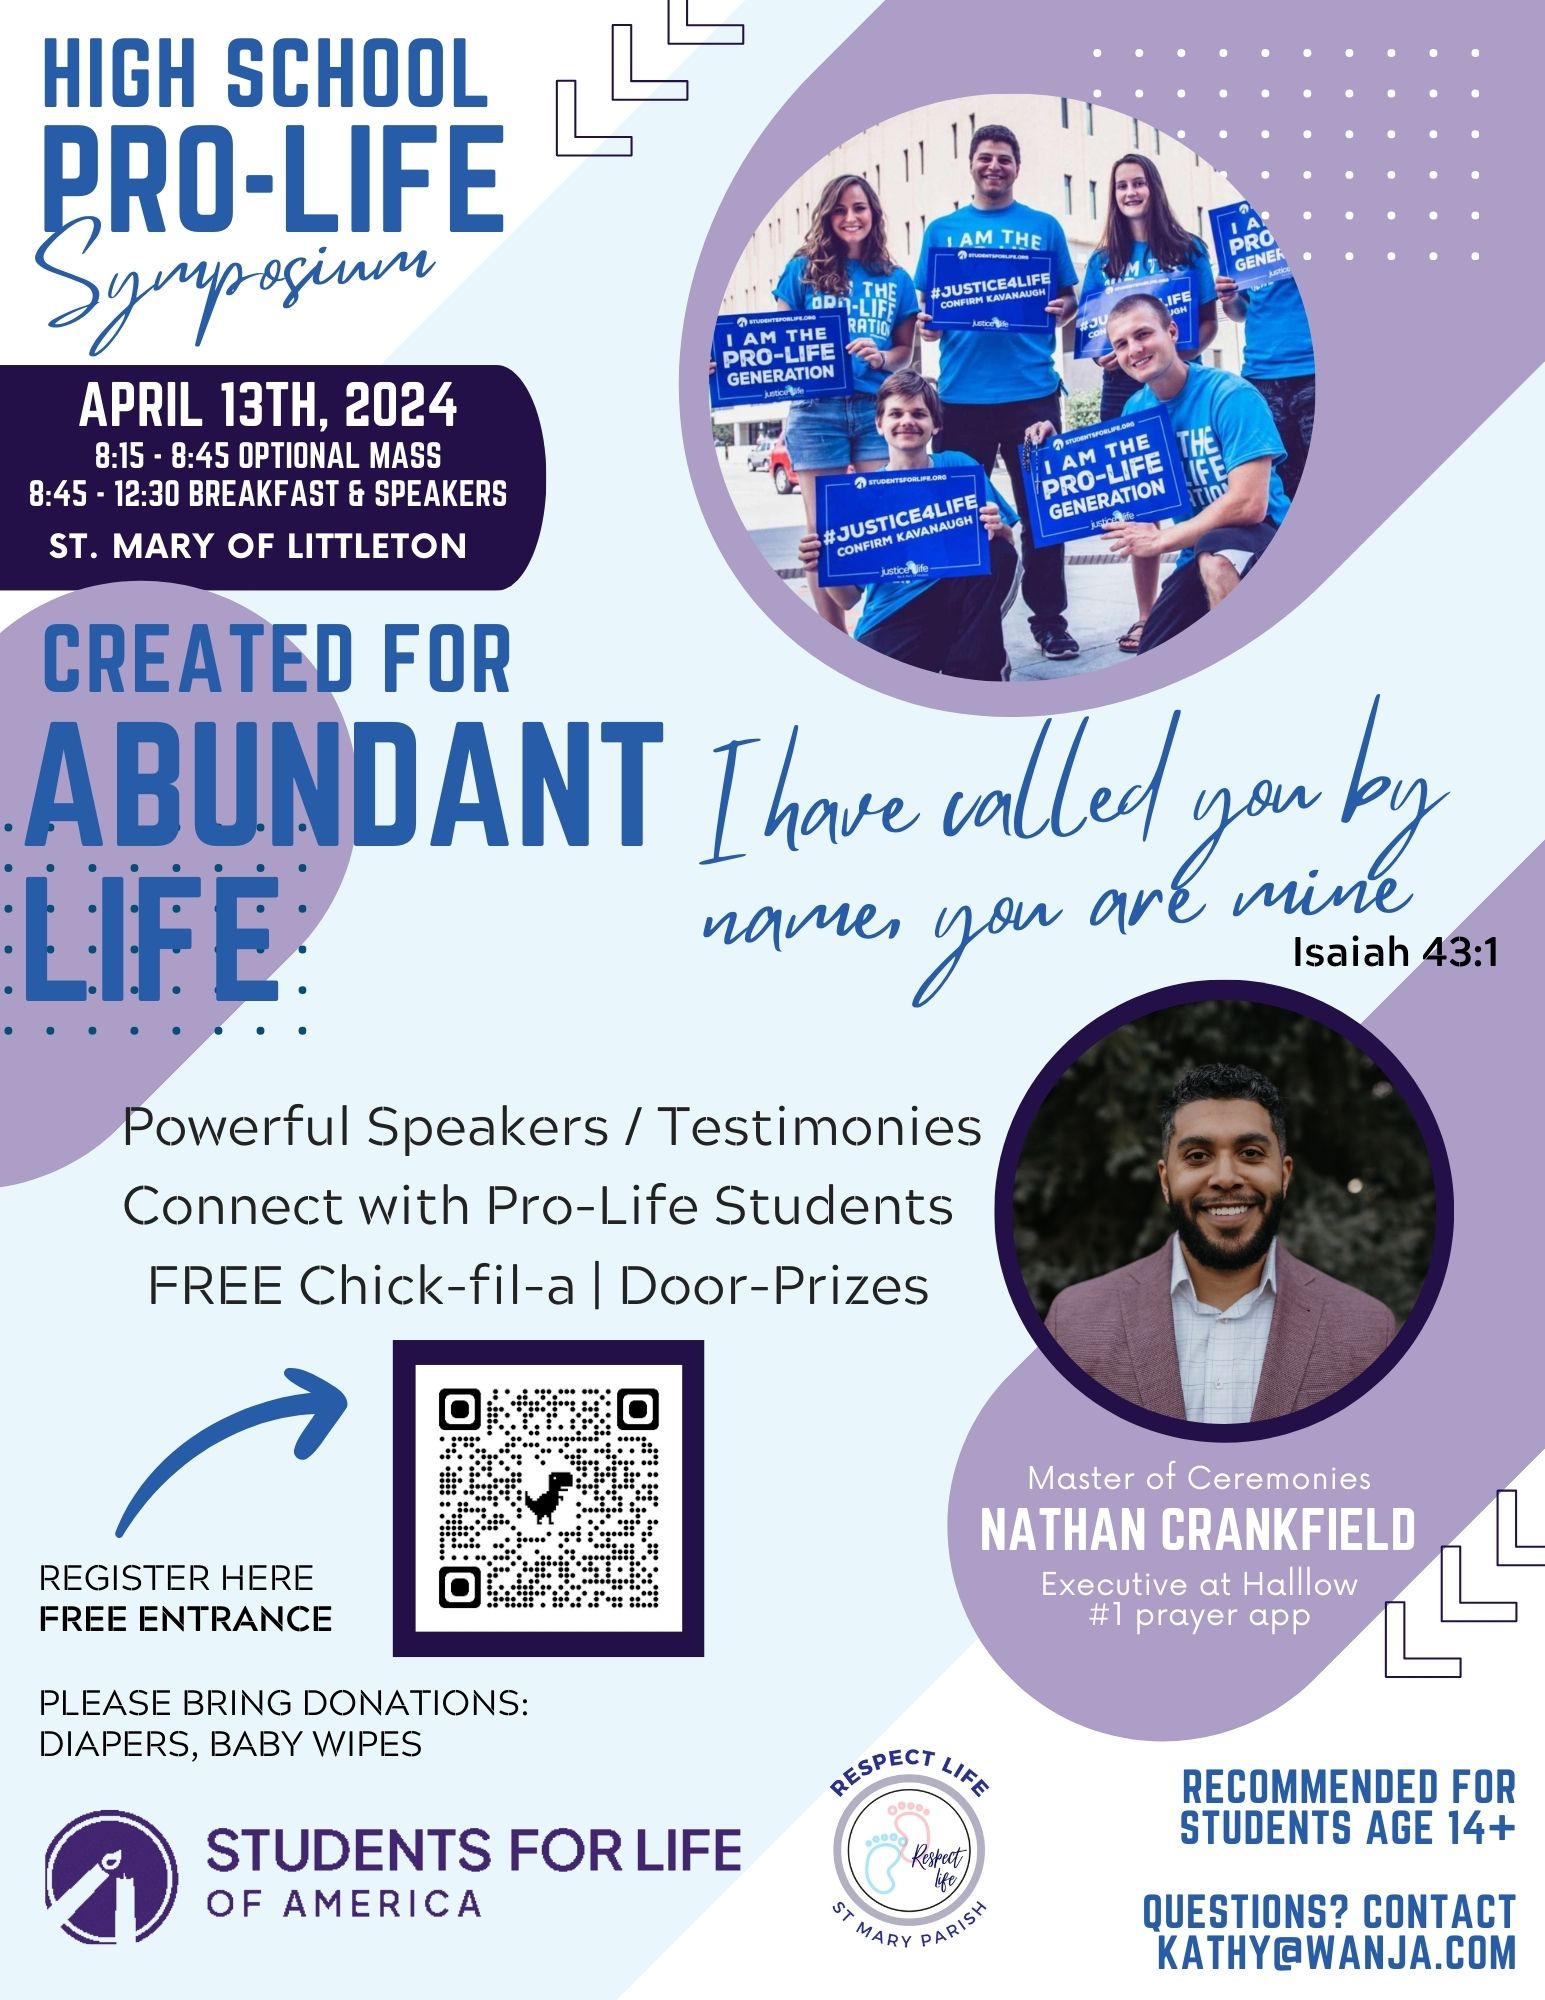 HS Pro-Life Symposium